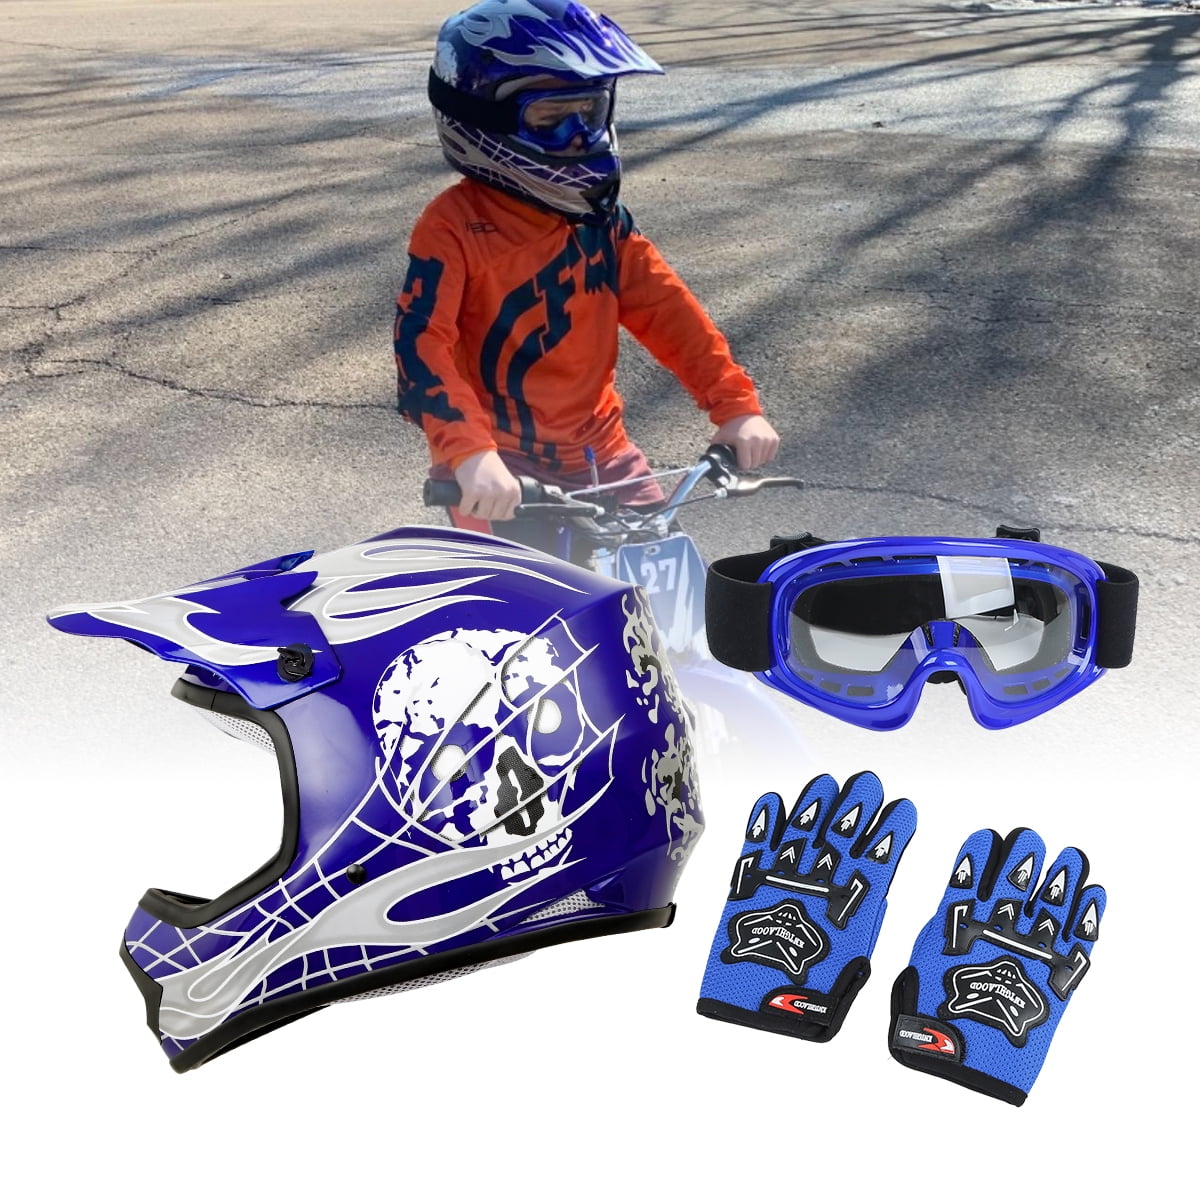 Child Youth XS Motocross Dirt Bike Helmet Kids ATV Extra Small & Goggles 